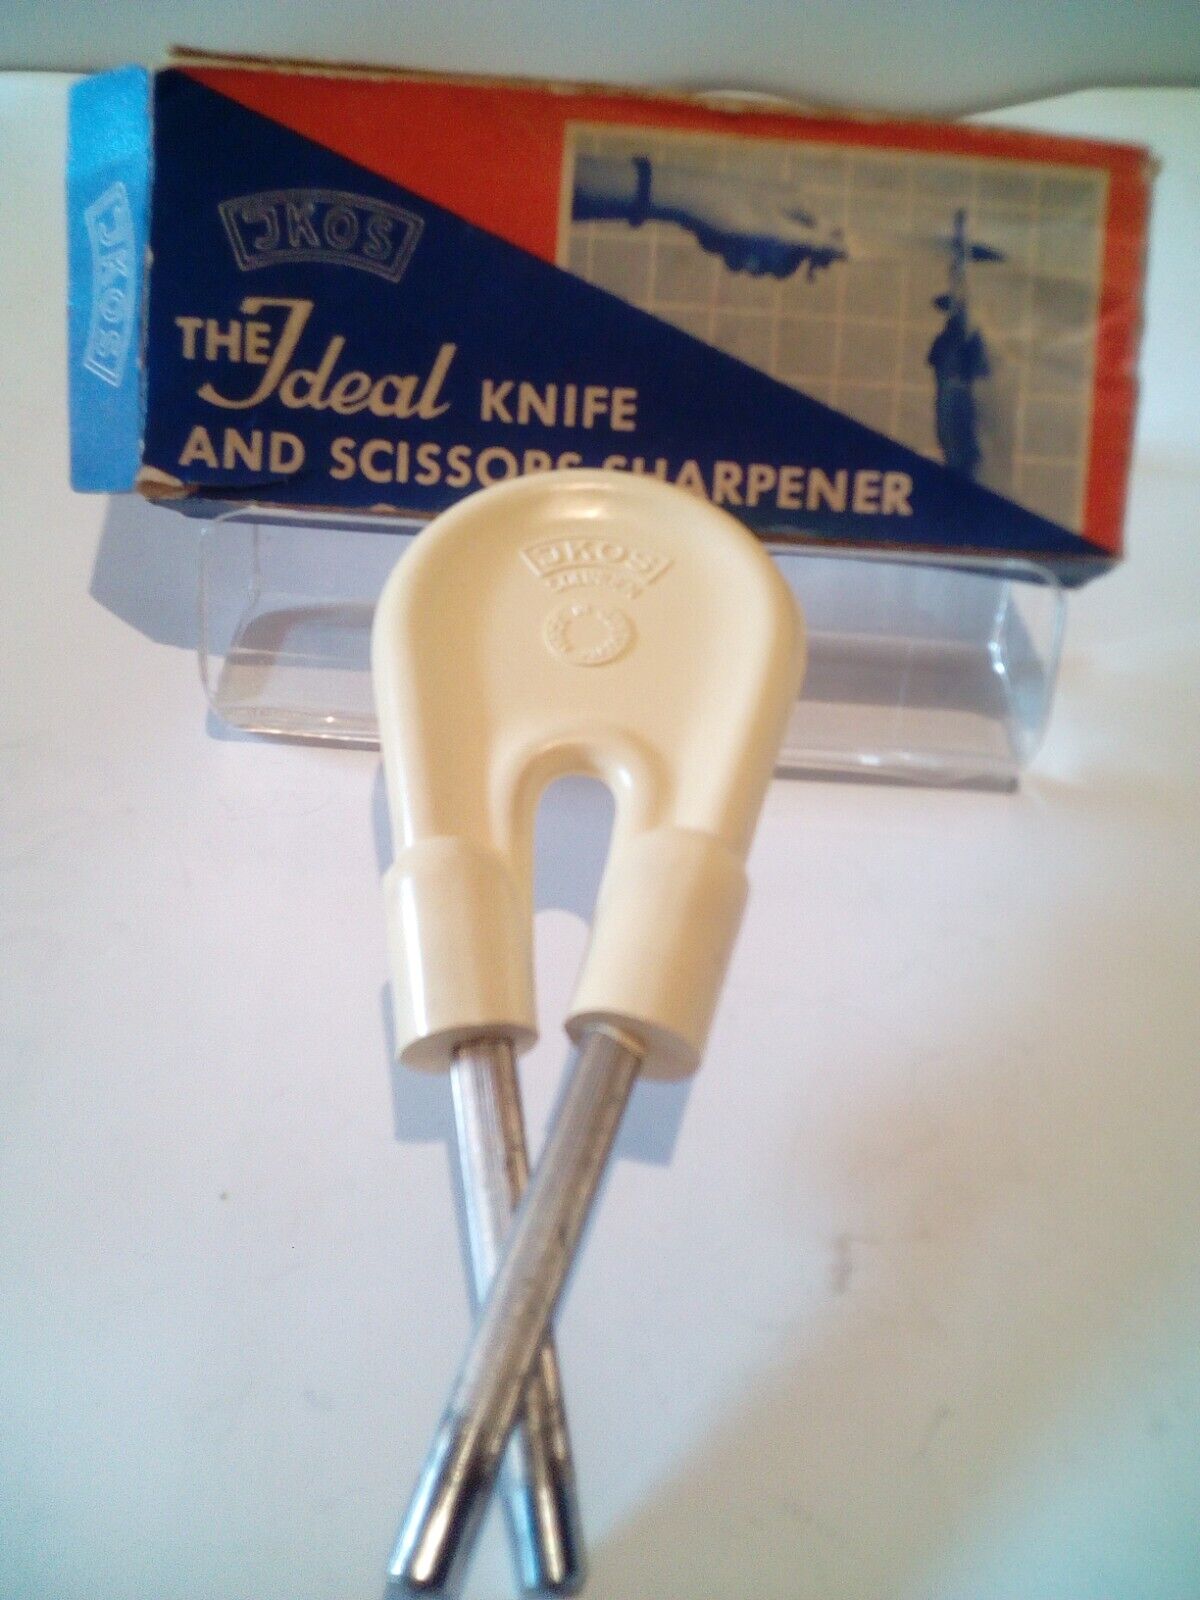 Vintage JKOS Knife and scissors sharpener w/Box, GERMANY